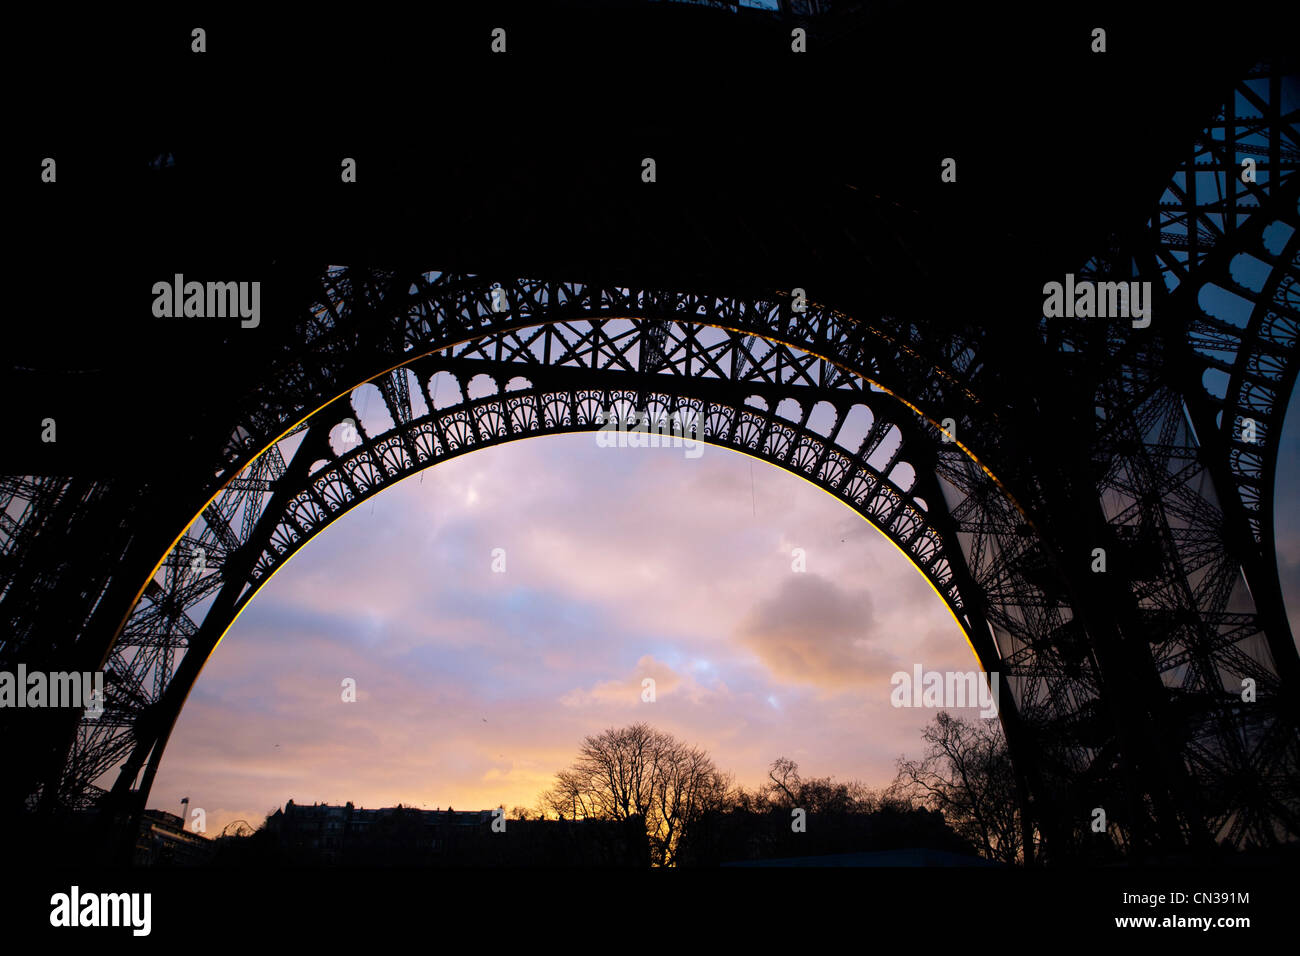 Underneath Eiffel Tower at sunset, Paris, France Stock Photo